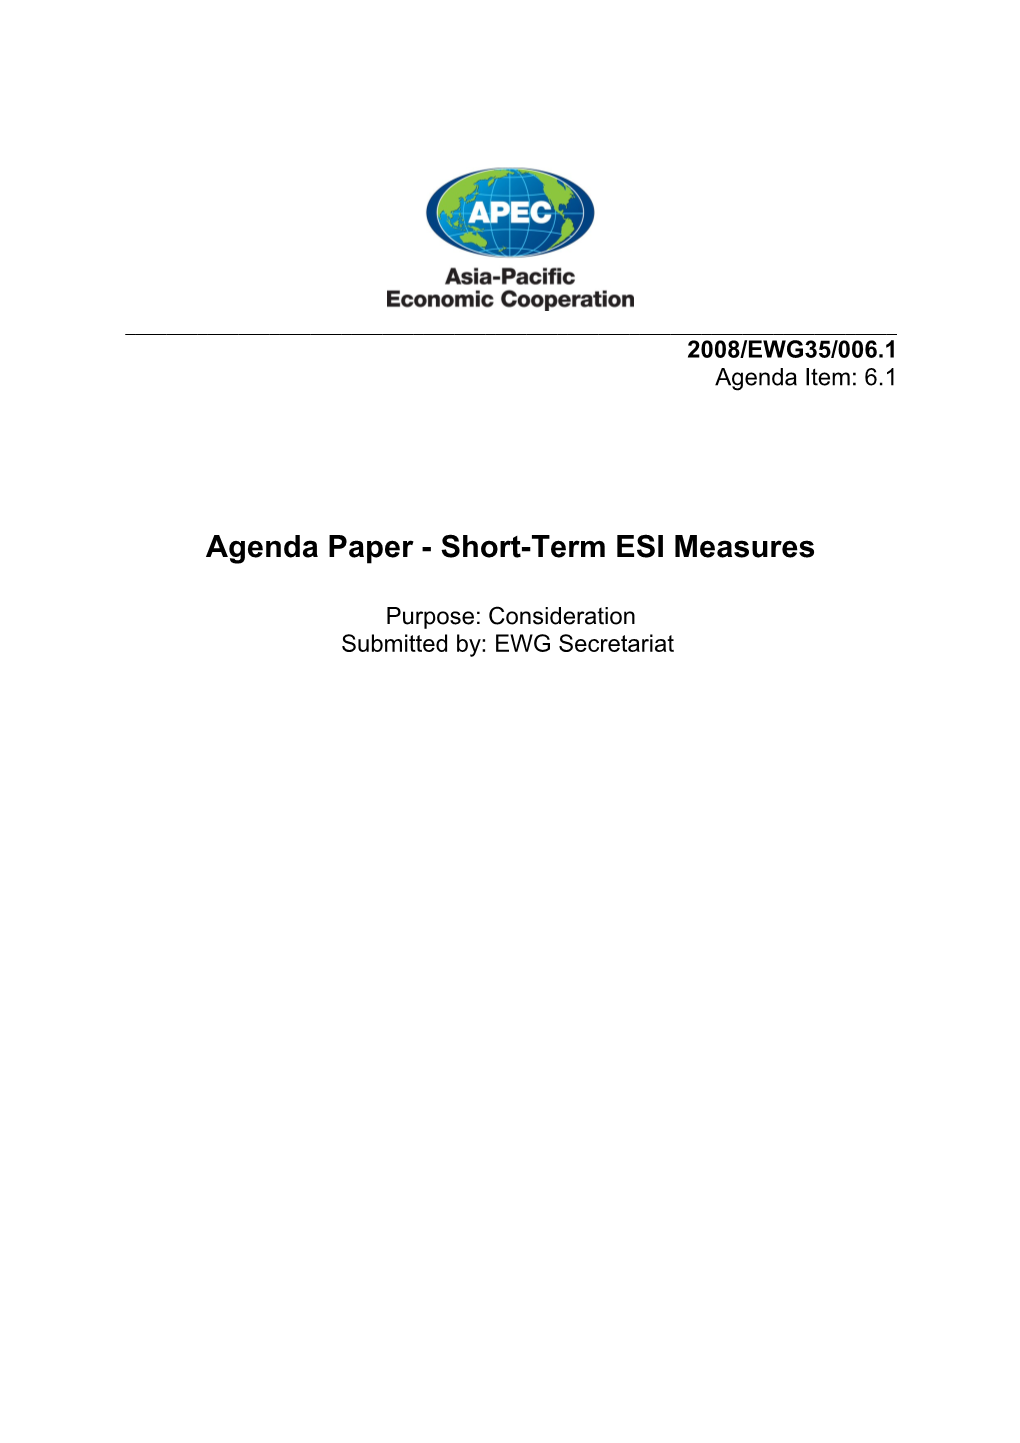 APEC and EWG Secretariat Report